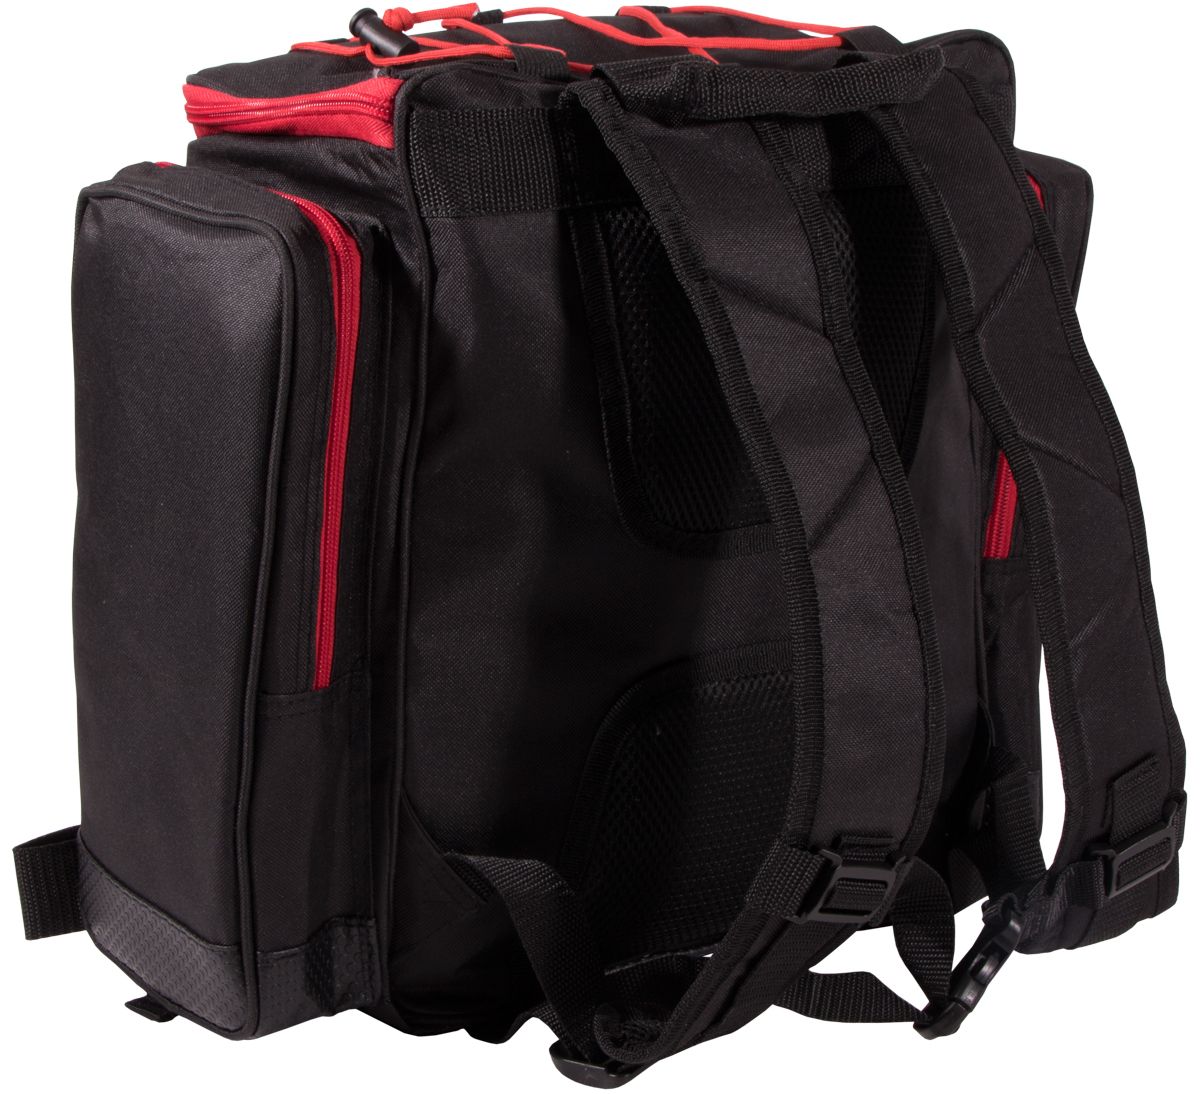 Ultimate Predator Backpack Deluxe + 3 Tackleboxes